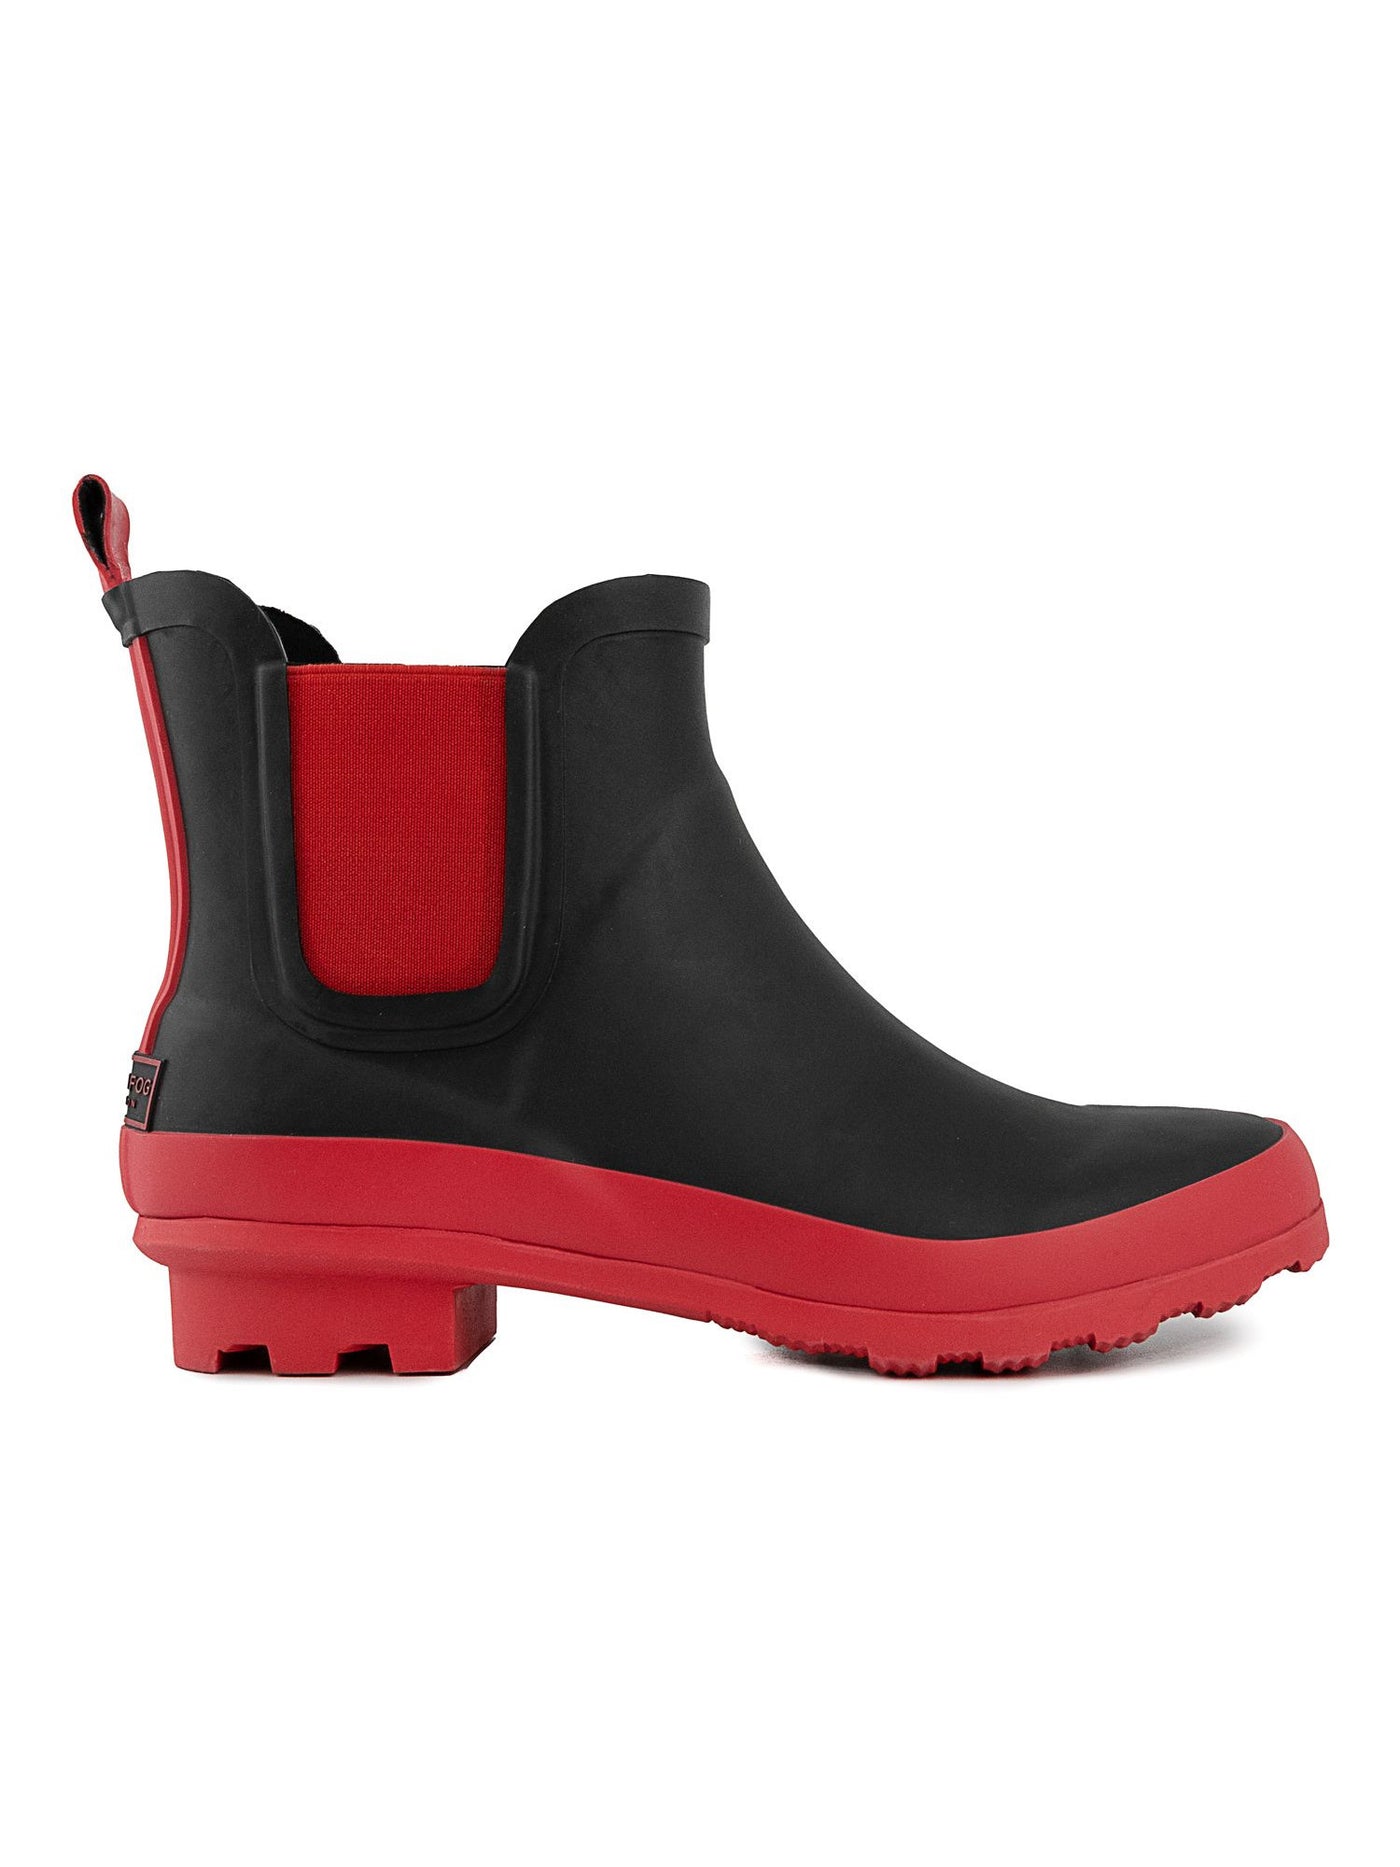 LONDON FOG Womens Black Removable Insole Goring Wembley Round Toe Block Heel Rain Boots 8 M